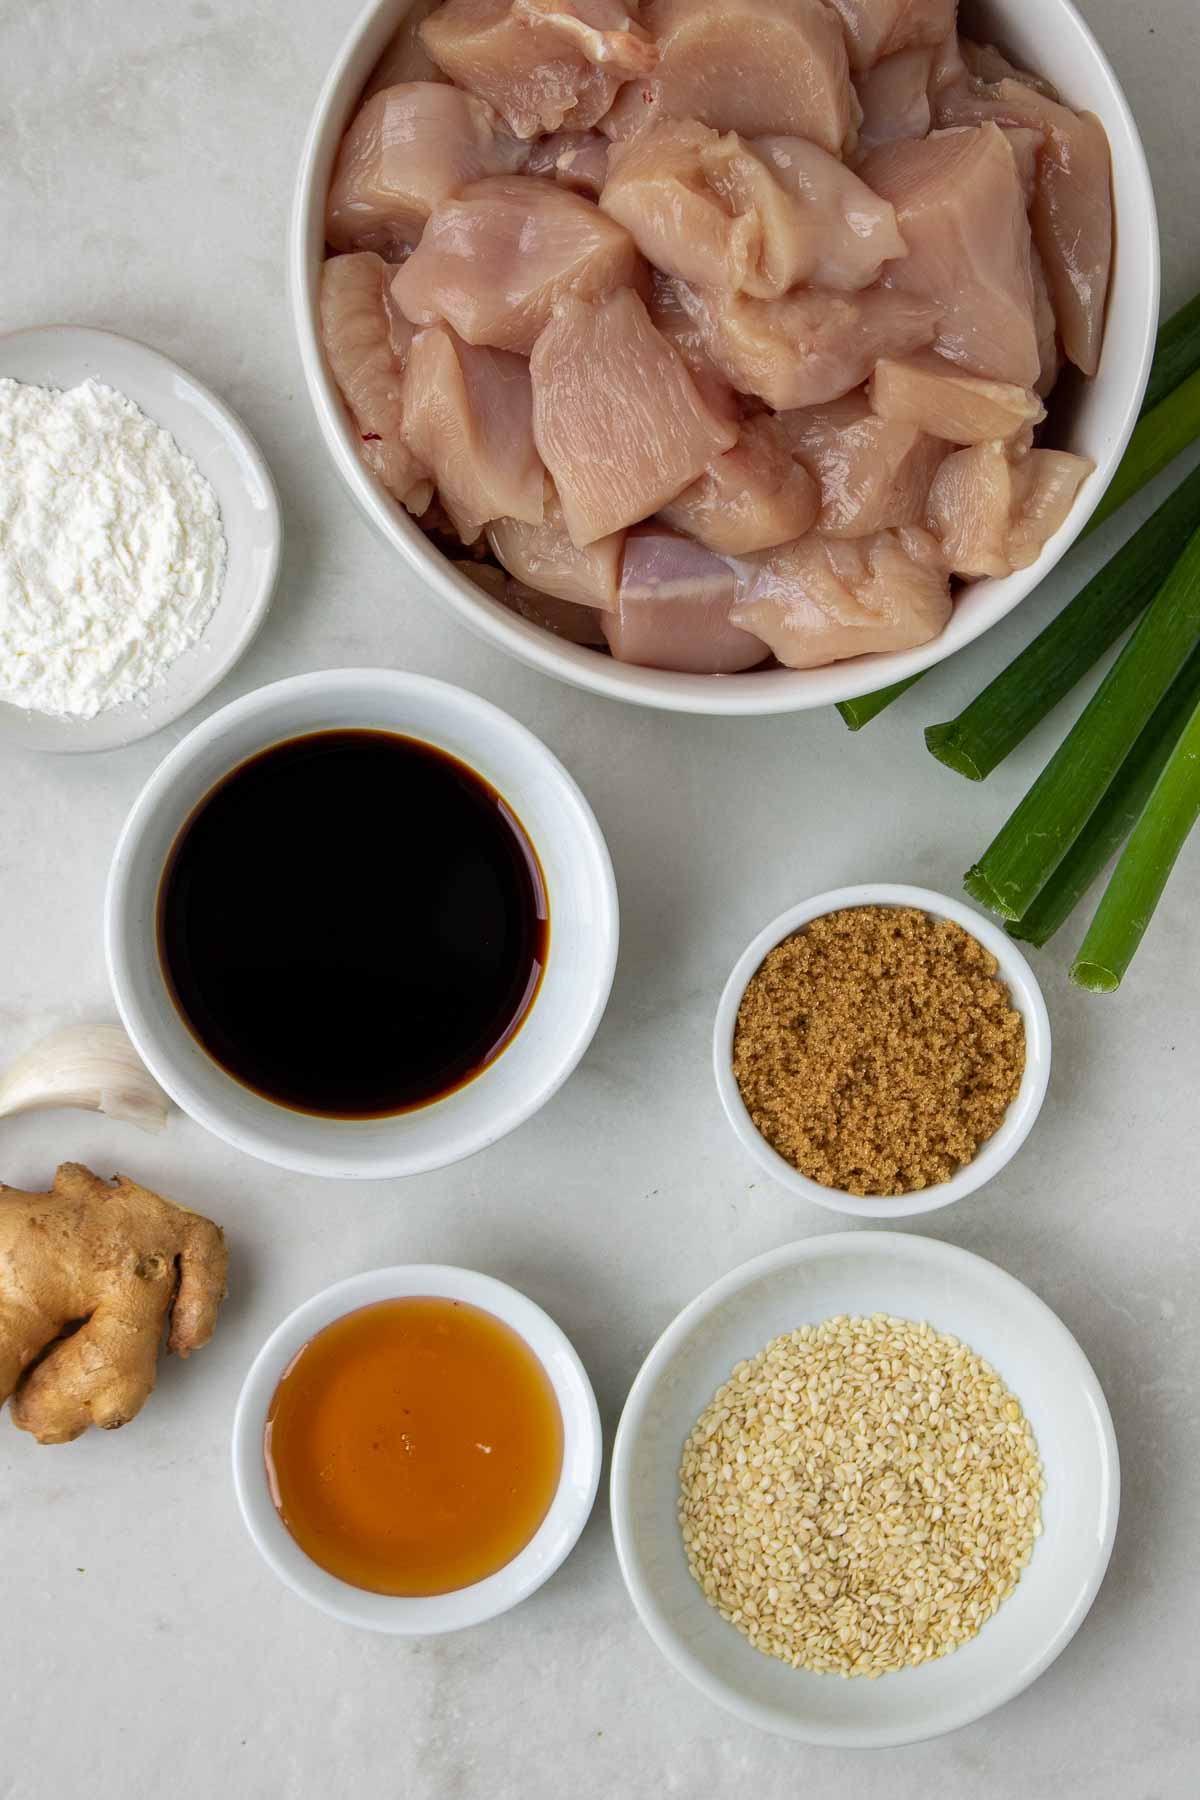 Ingredients for teriyaki chicken skewers: cubed chicken, soy sauce, brown sugar, honey, ginger, garlic, cornstarch, sesame seeds, and green onions.